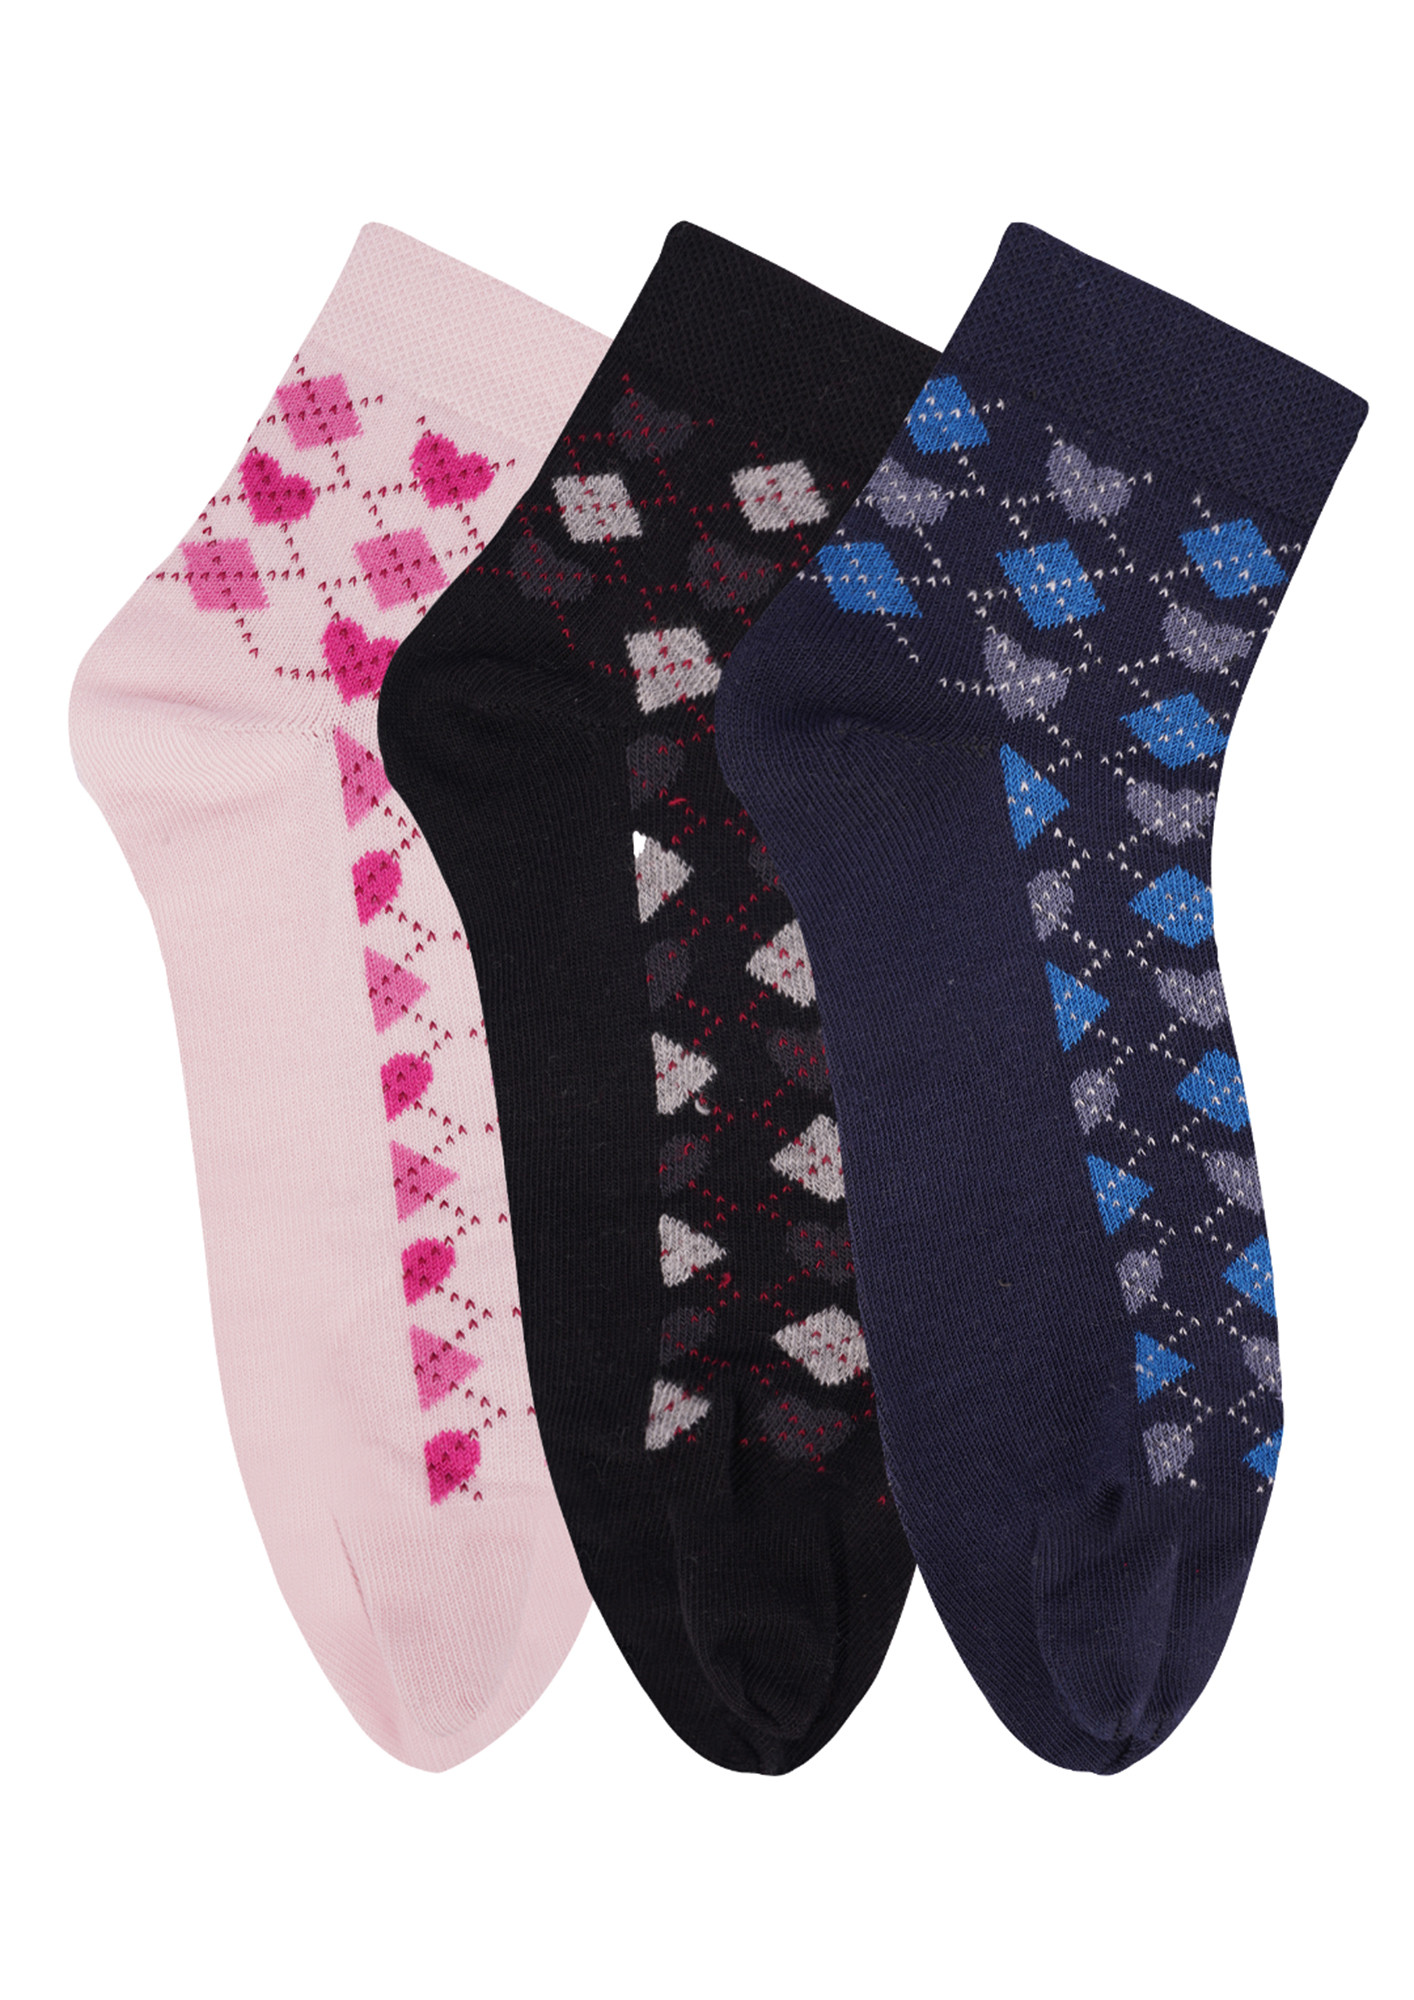 N2S NEXT2SKIN Women's Low Ankle Length Cotton Argyle Pattern Thumb Socks (Pack of 3) (Pink:Black:Navy)